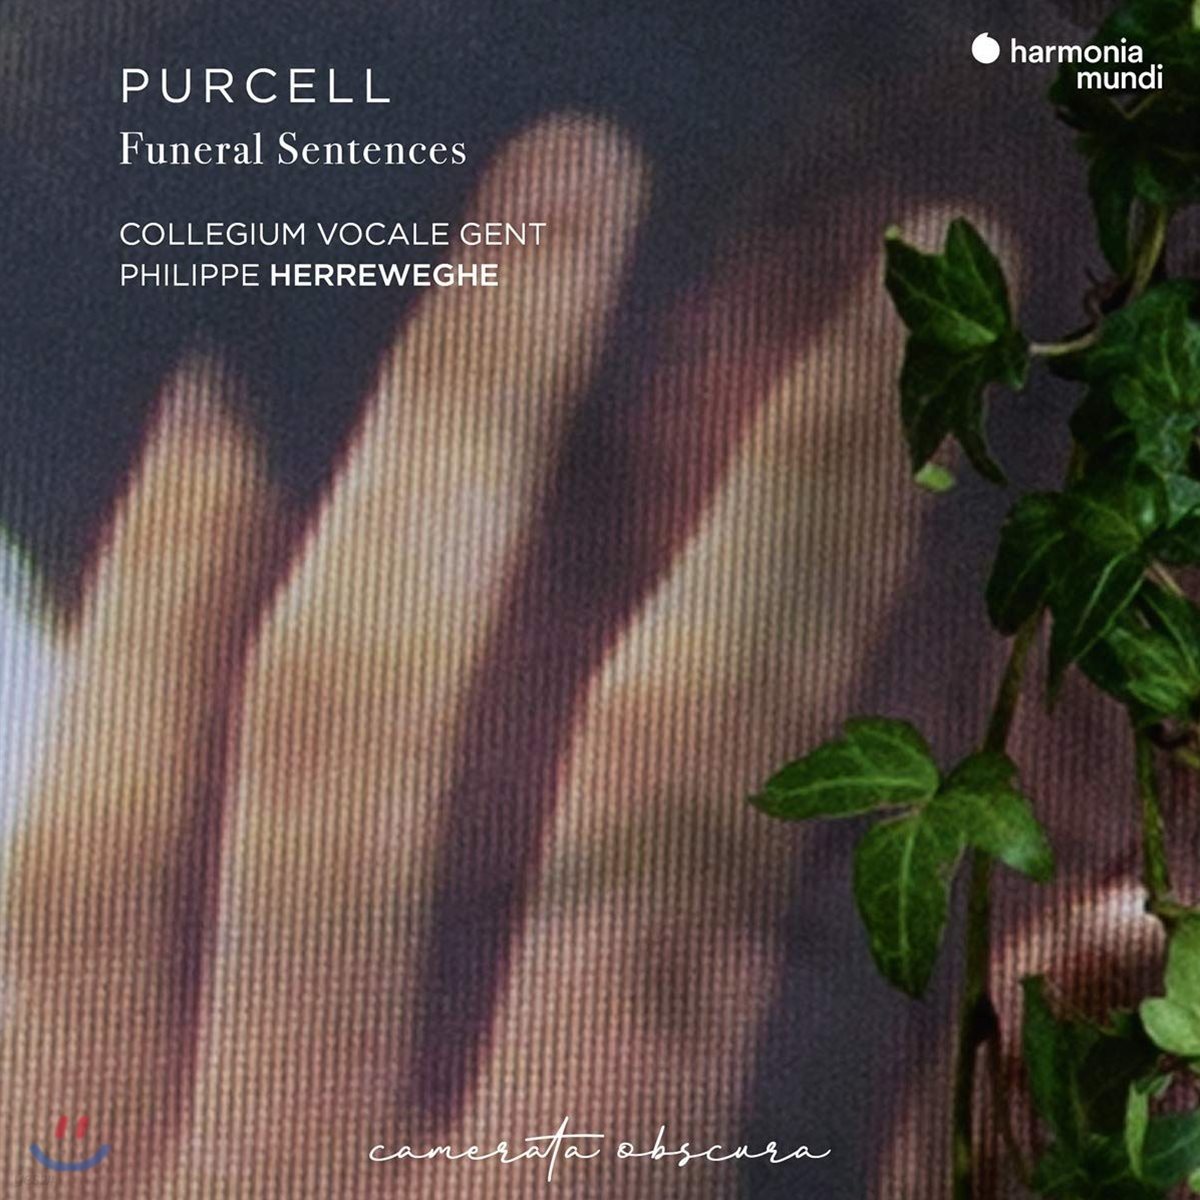 Philippe Herreweghe 퍼셀: 메리 여왕을 위한 장송 음악 (Purcell: Funeral Sentences)